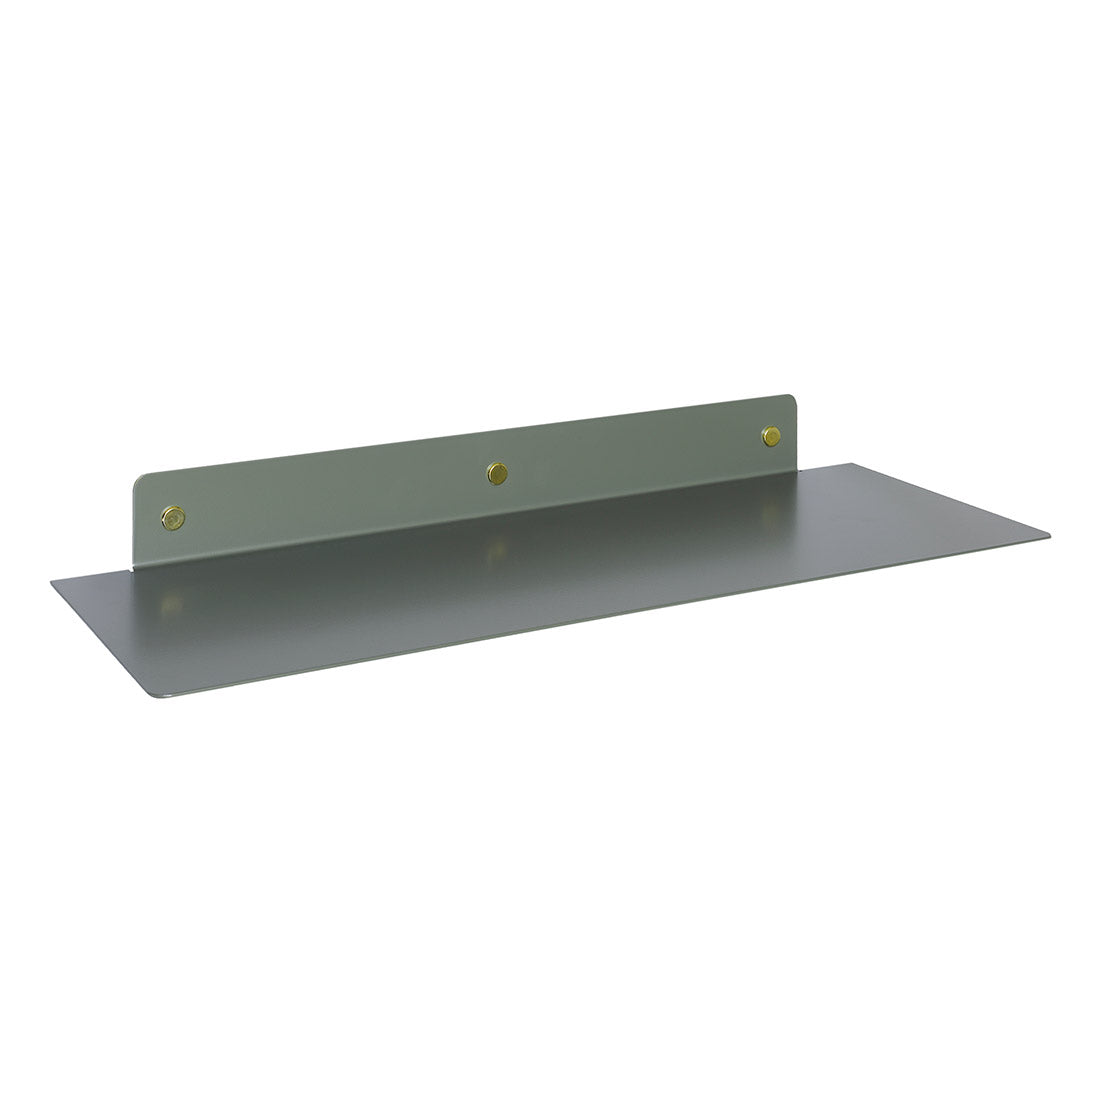 Curve Metal Shelf in Gray Green - 60 cm